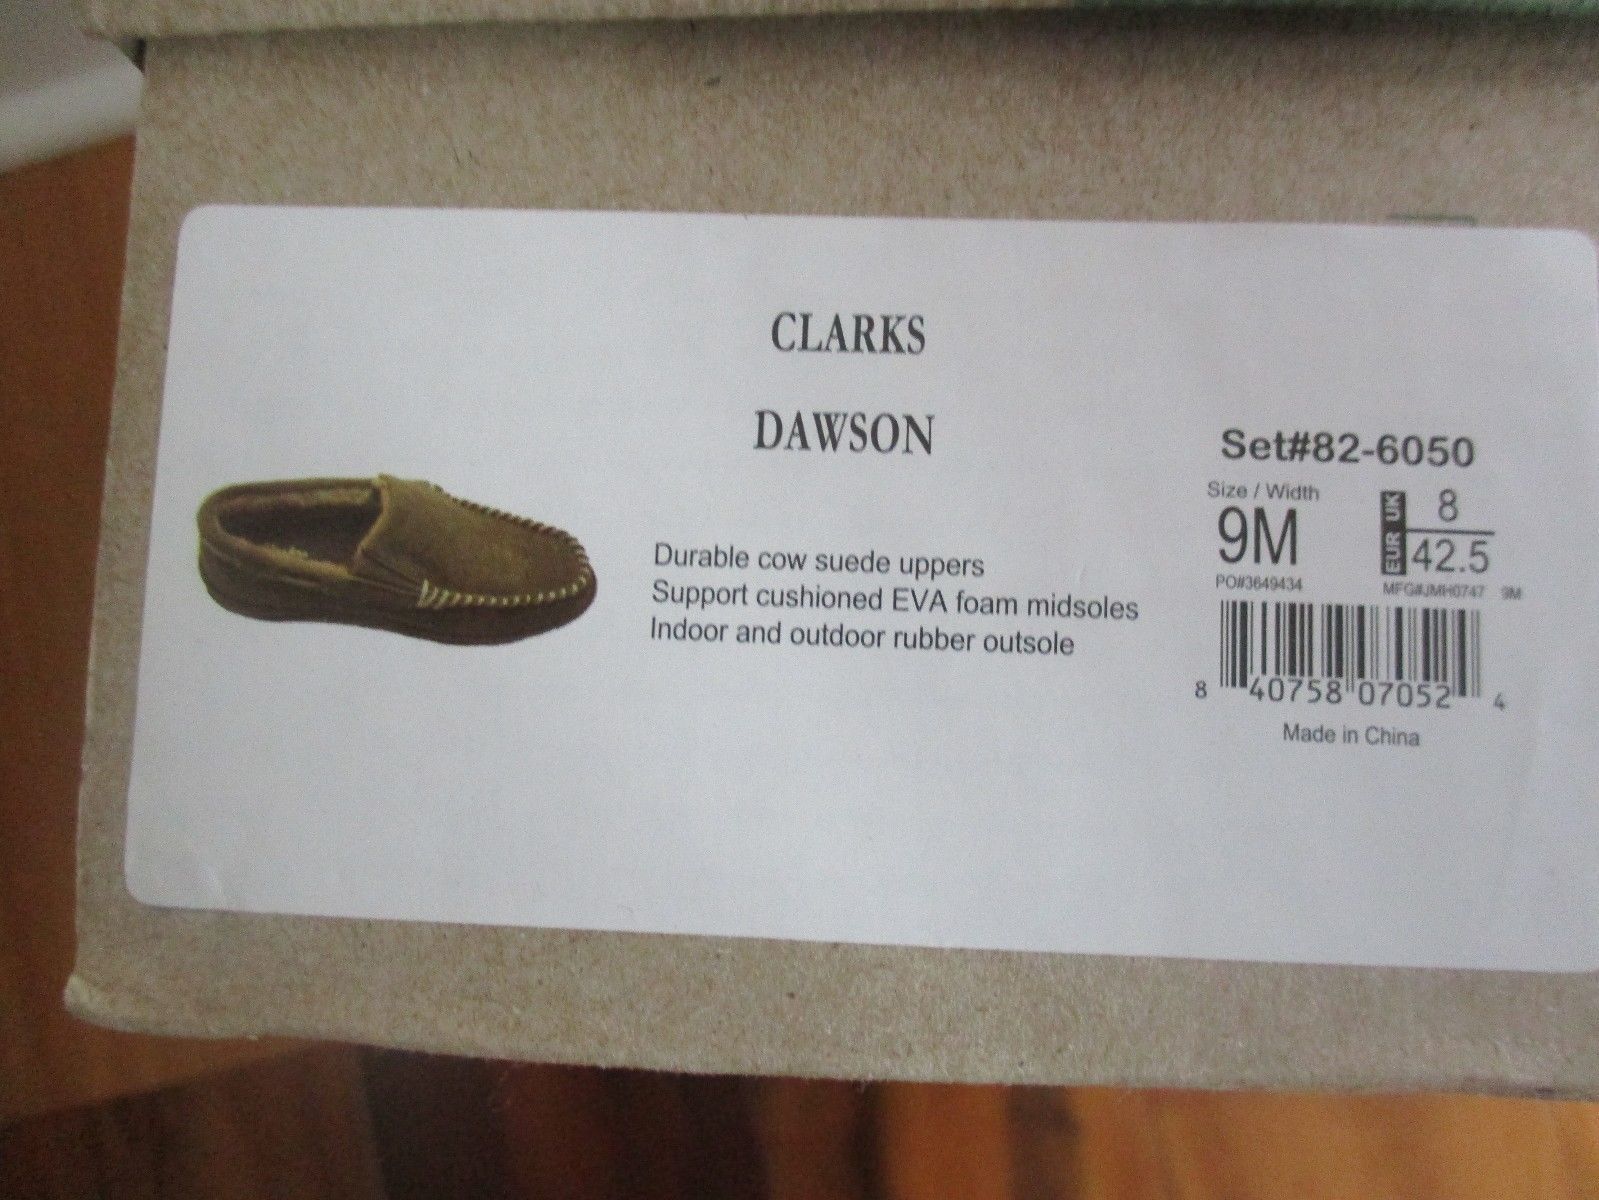 clarks dawson slippers